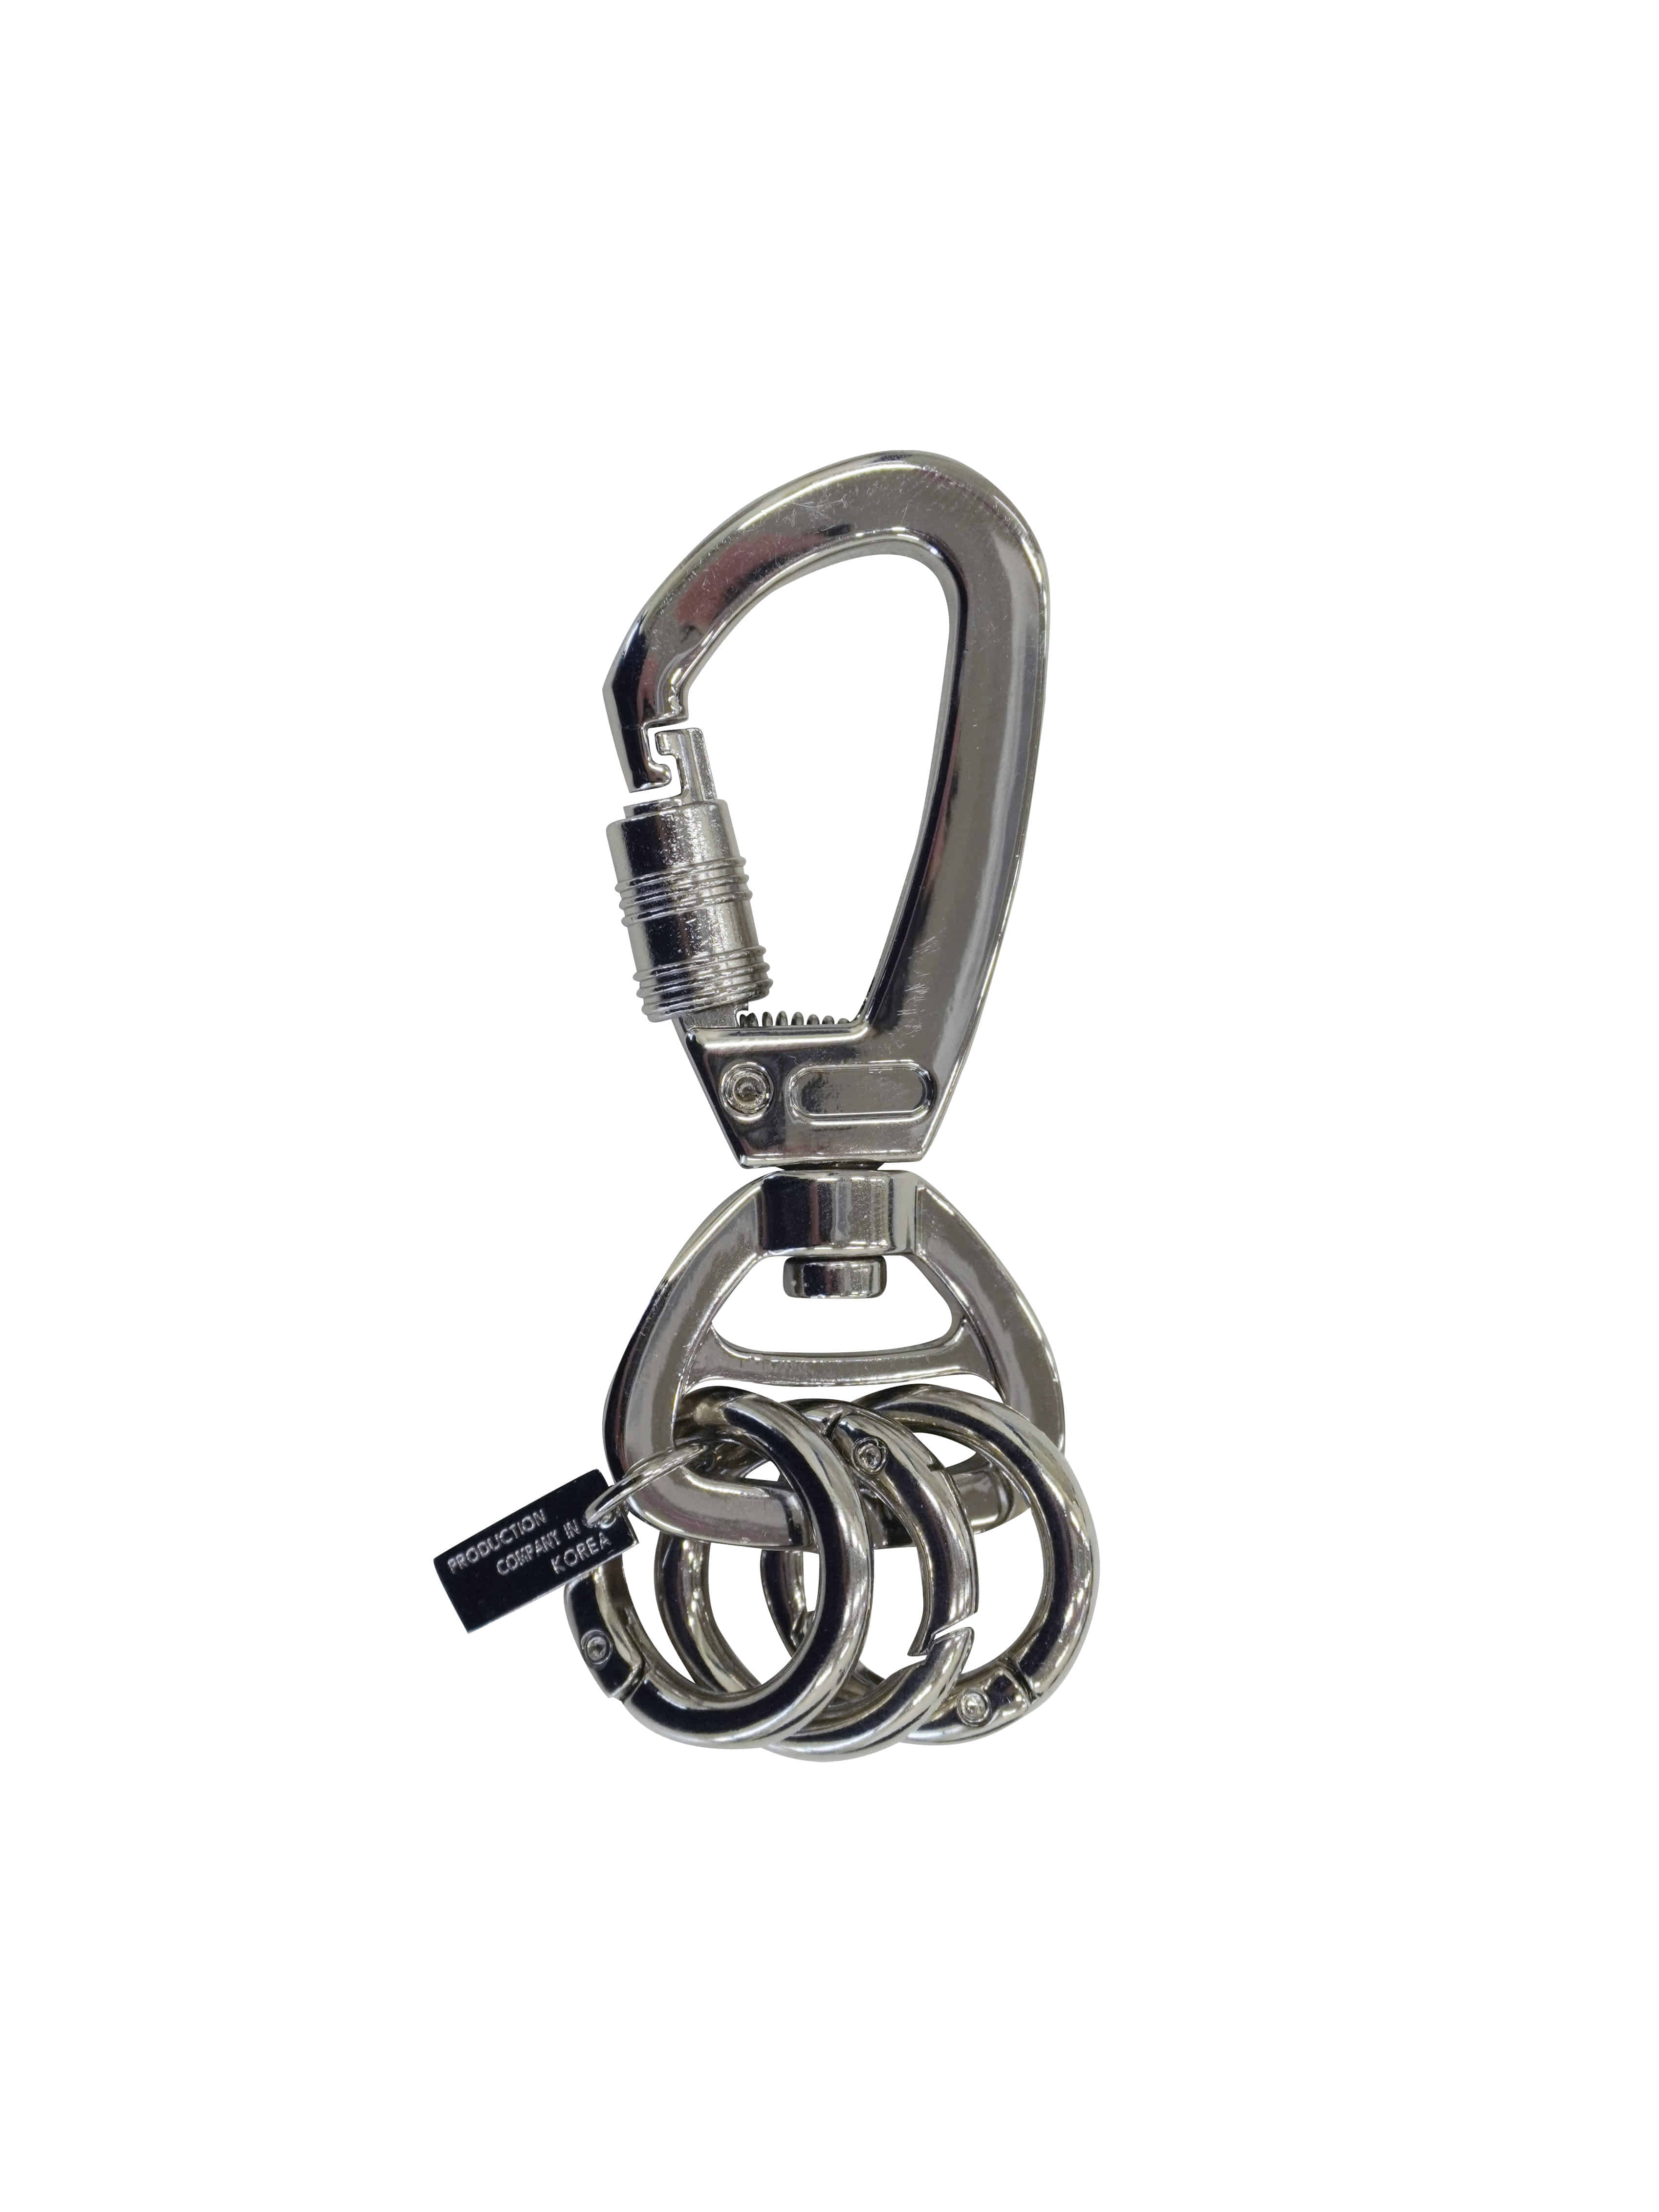 Hog surgical utility key-ring